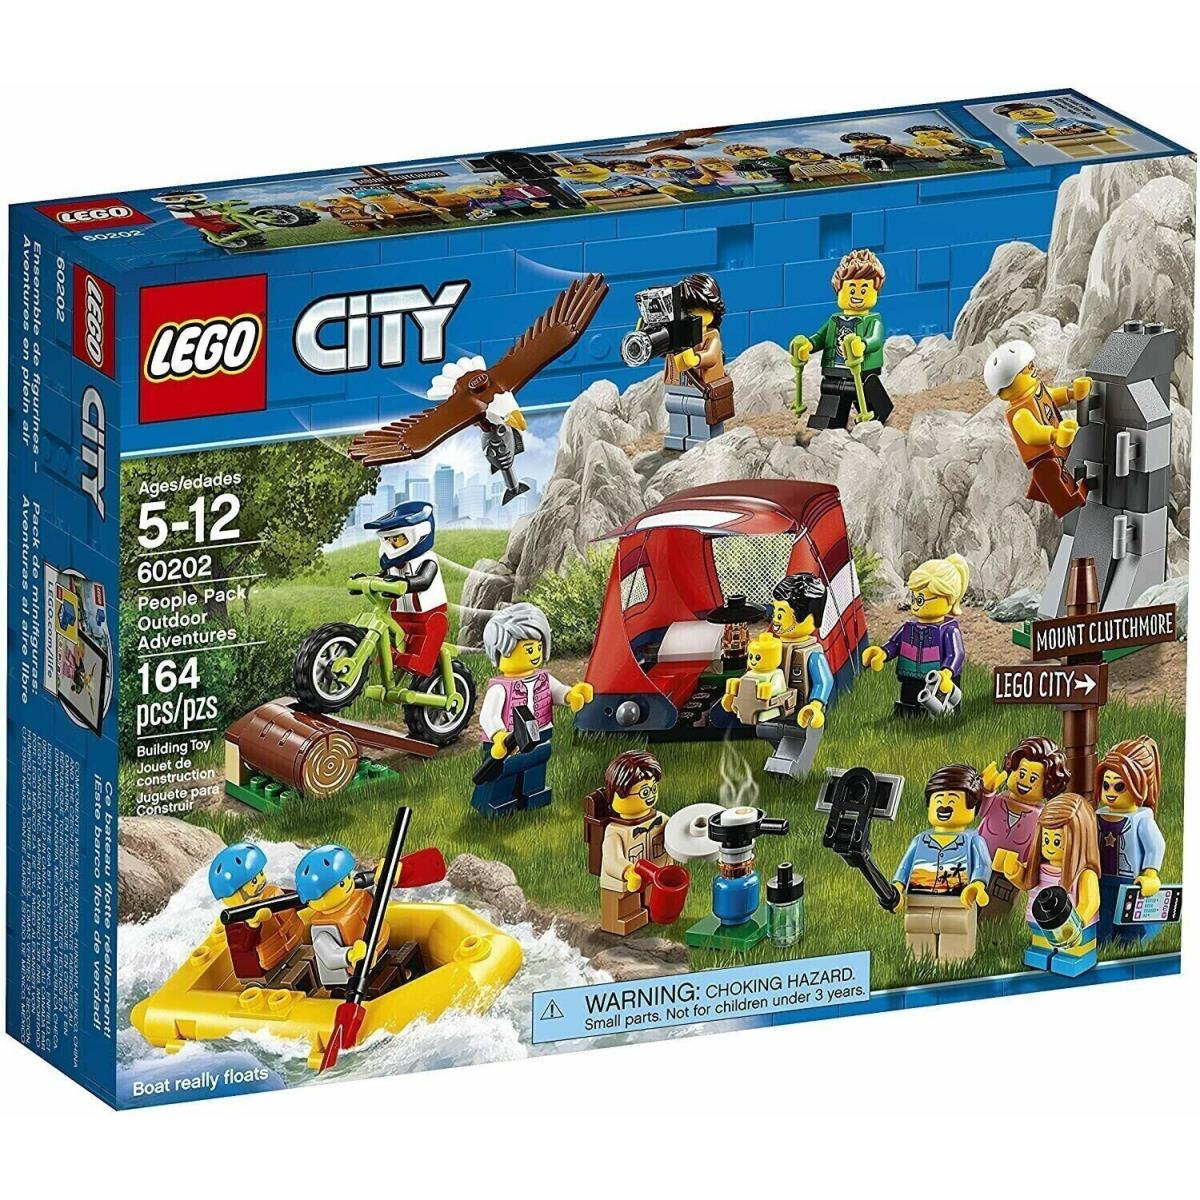 Lego City 60202 People Pack - Outdoor Adventures Building Set 164 Pcs